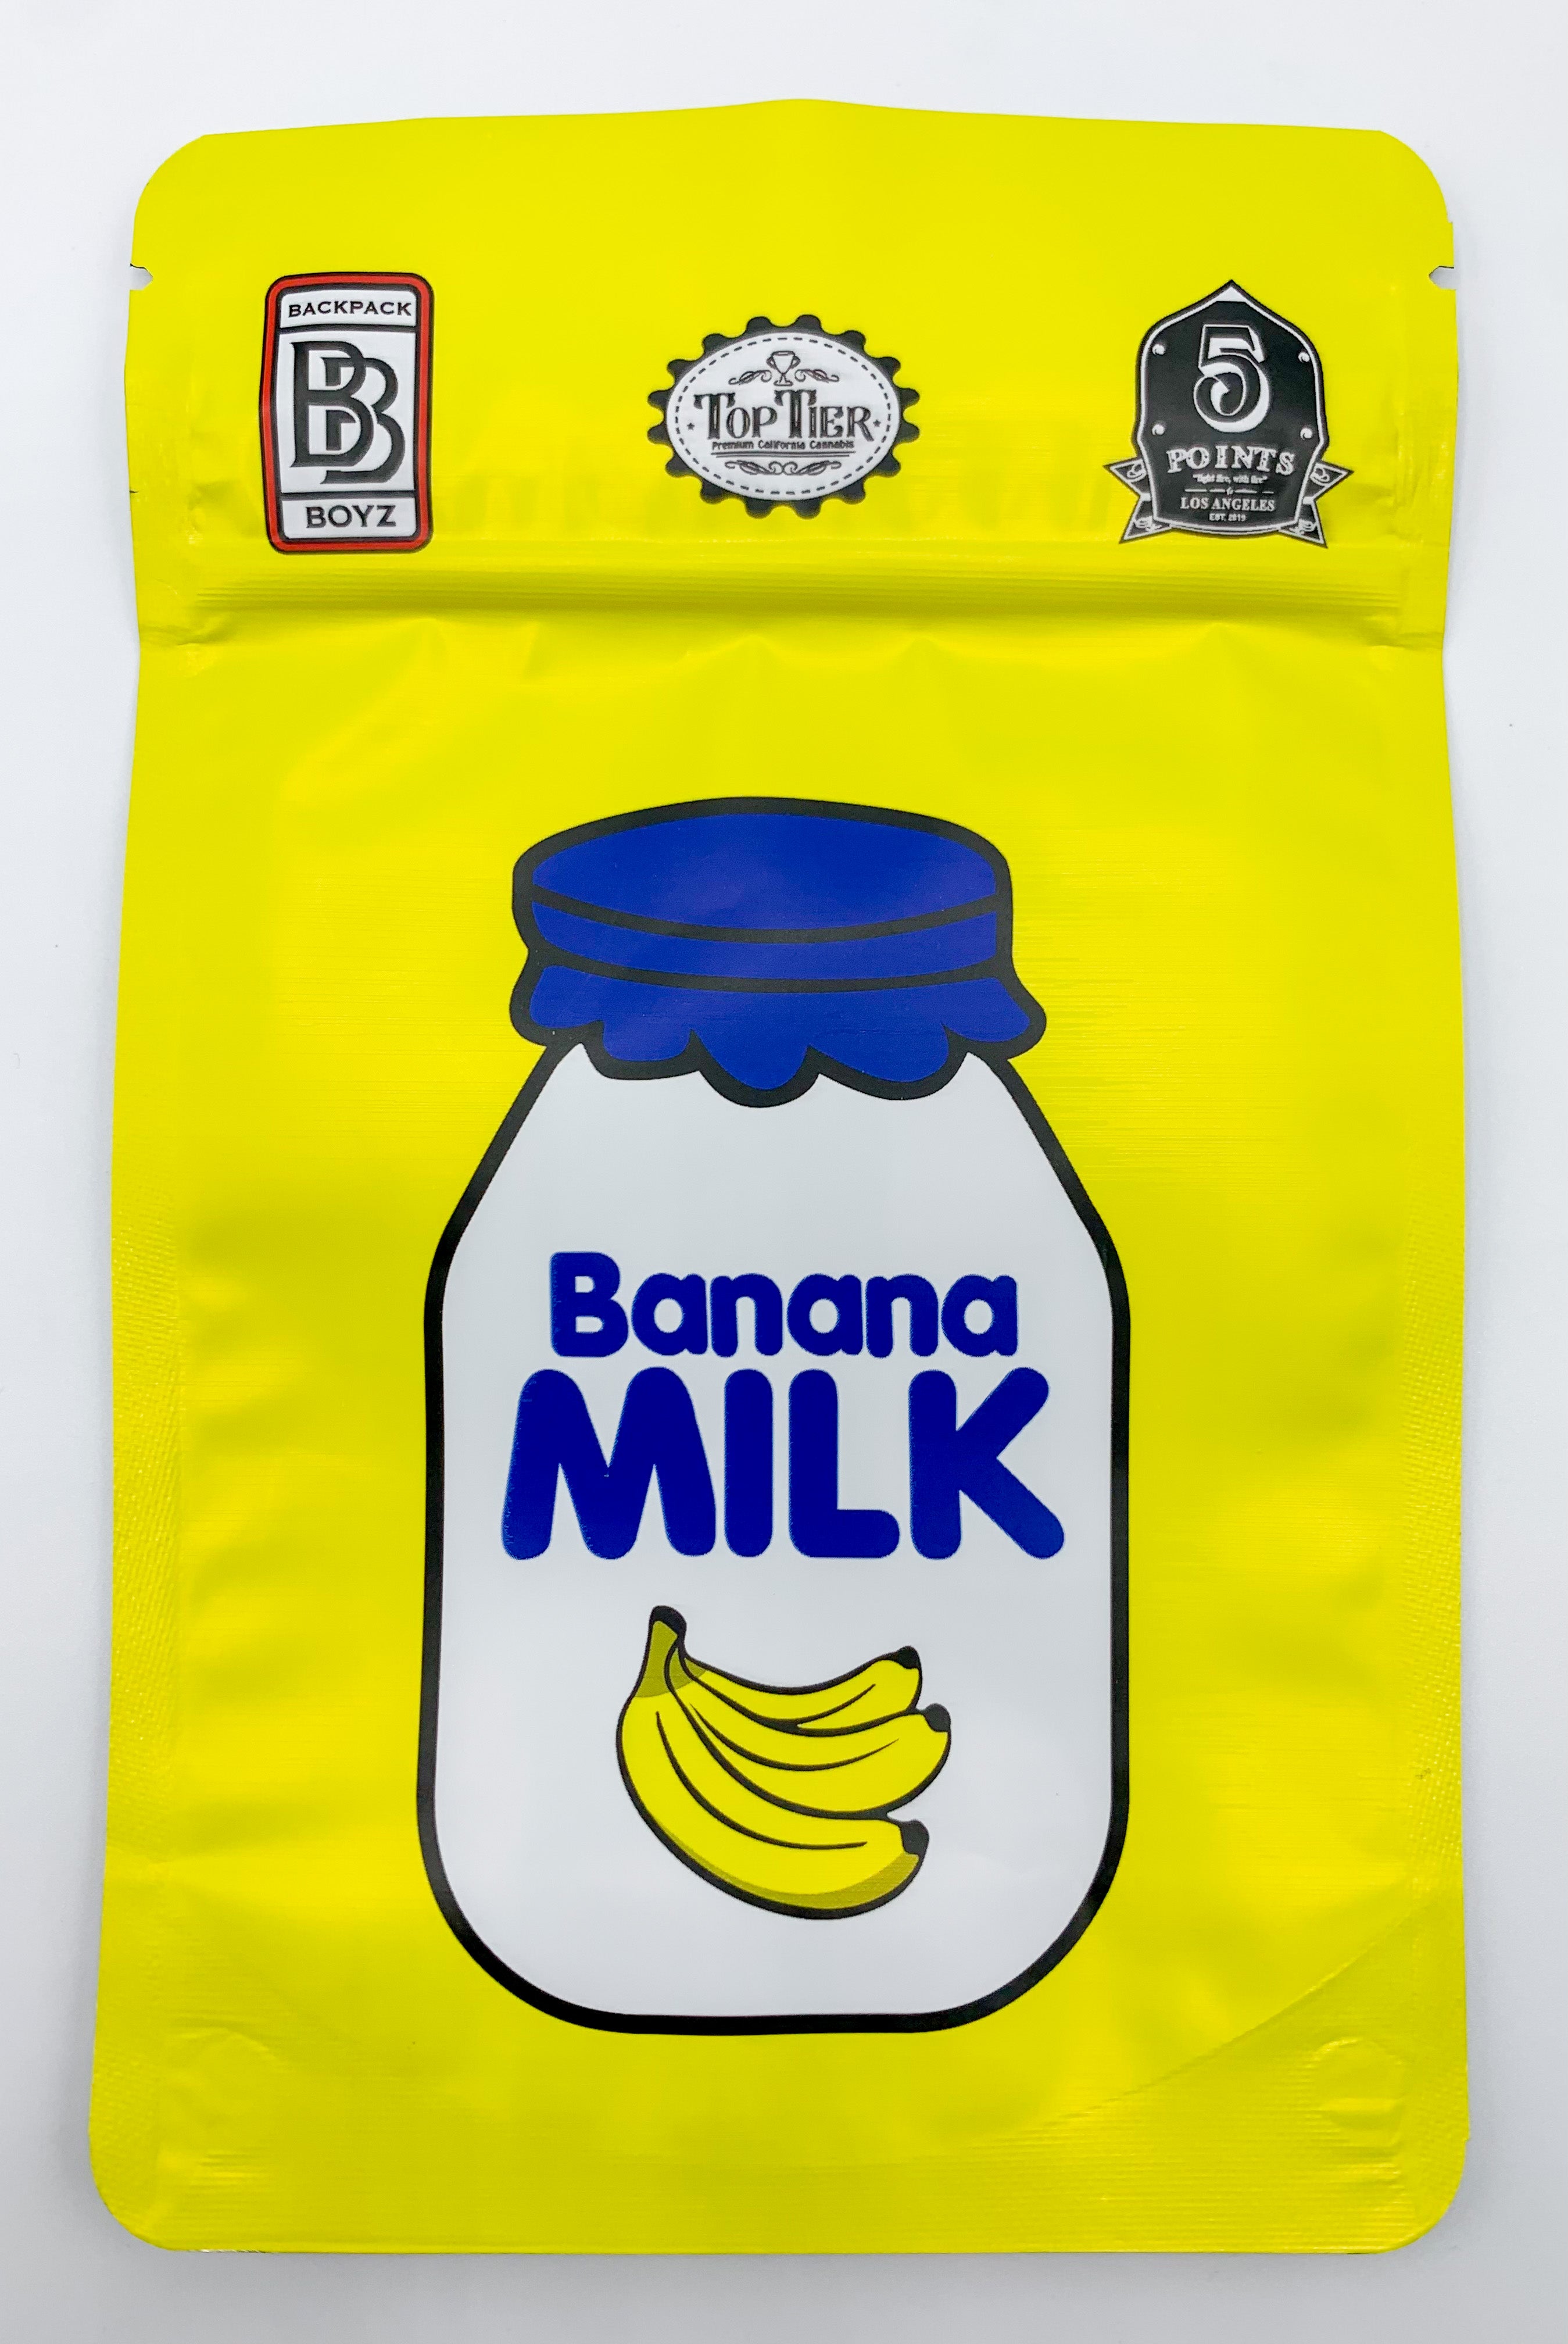 Backpack Boyz Banana Milk 3.5G Mylar bags